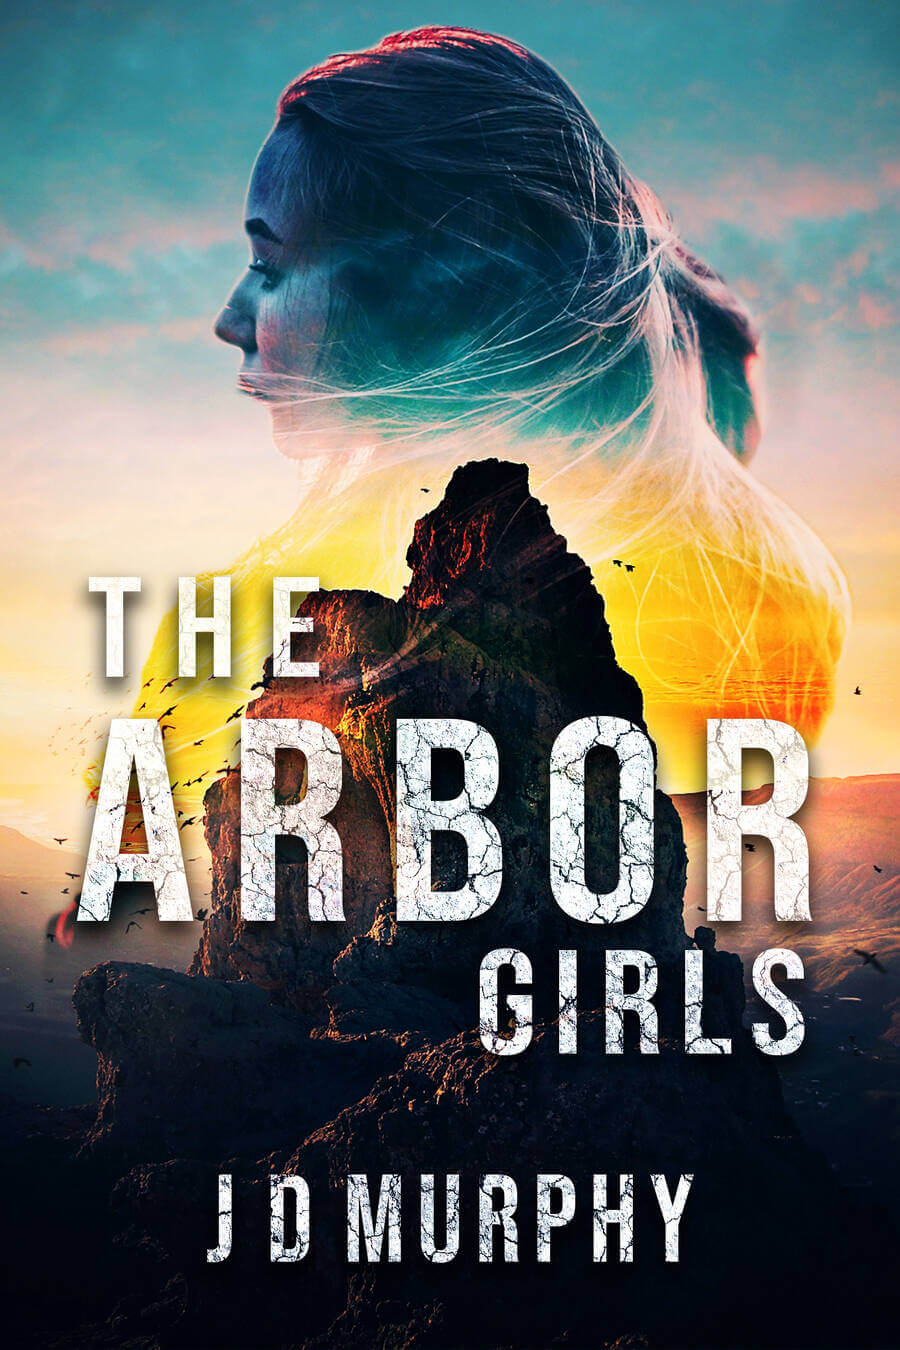 The Arbor Girls